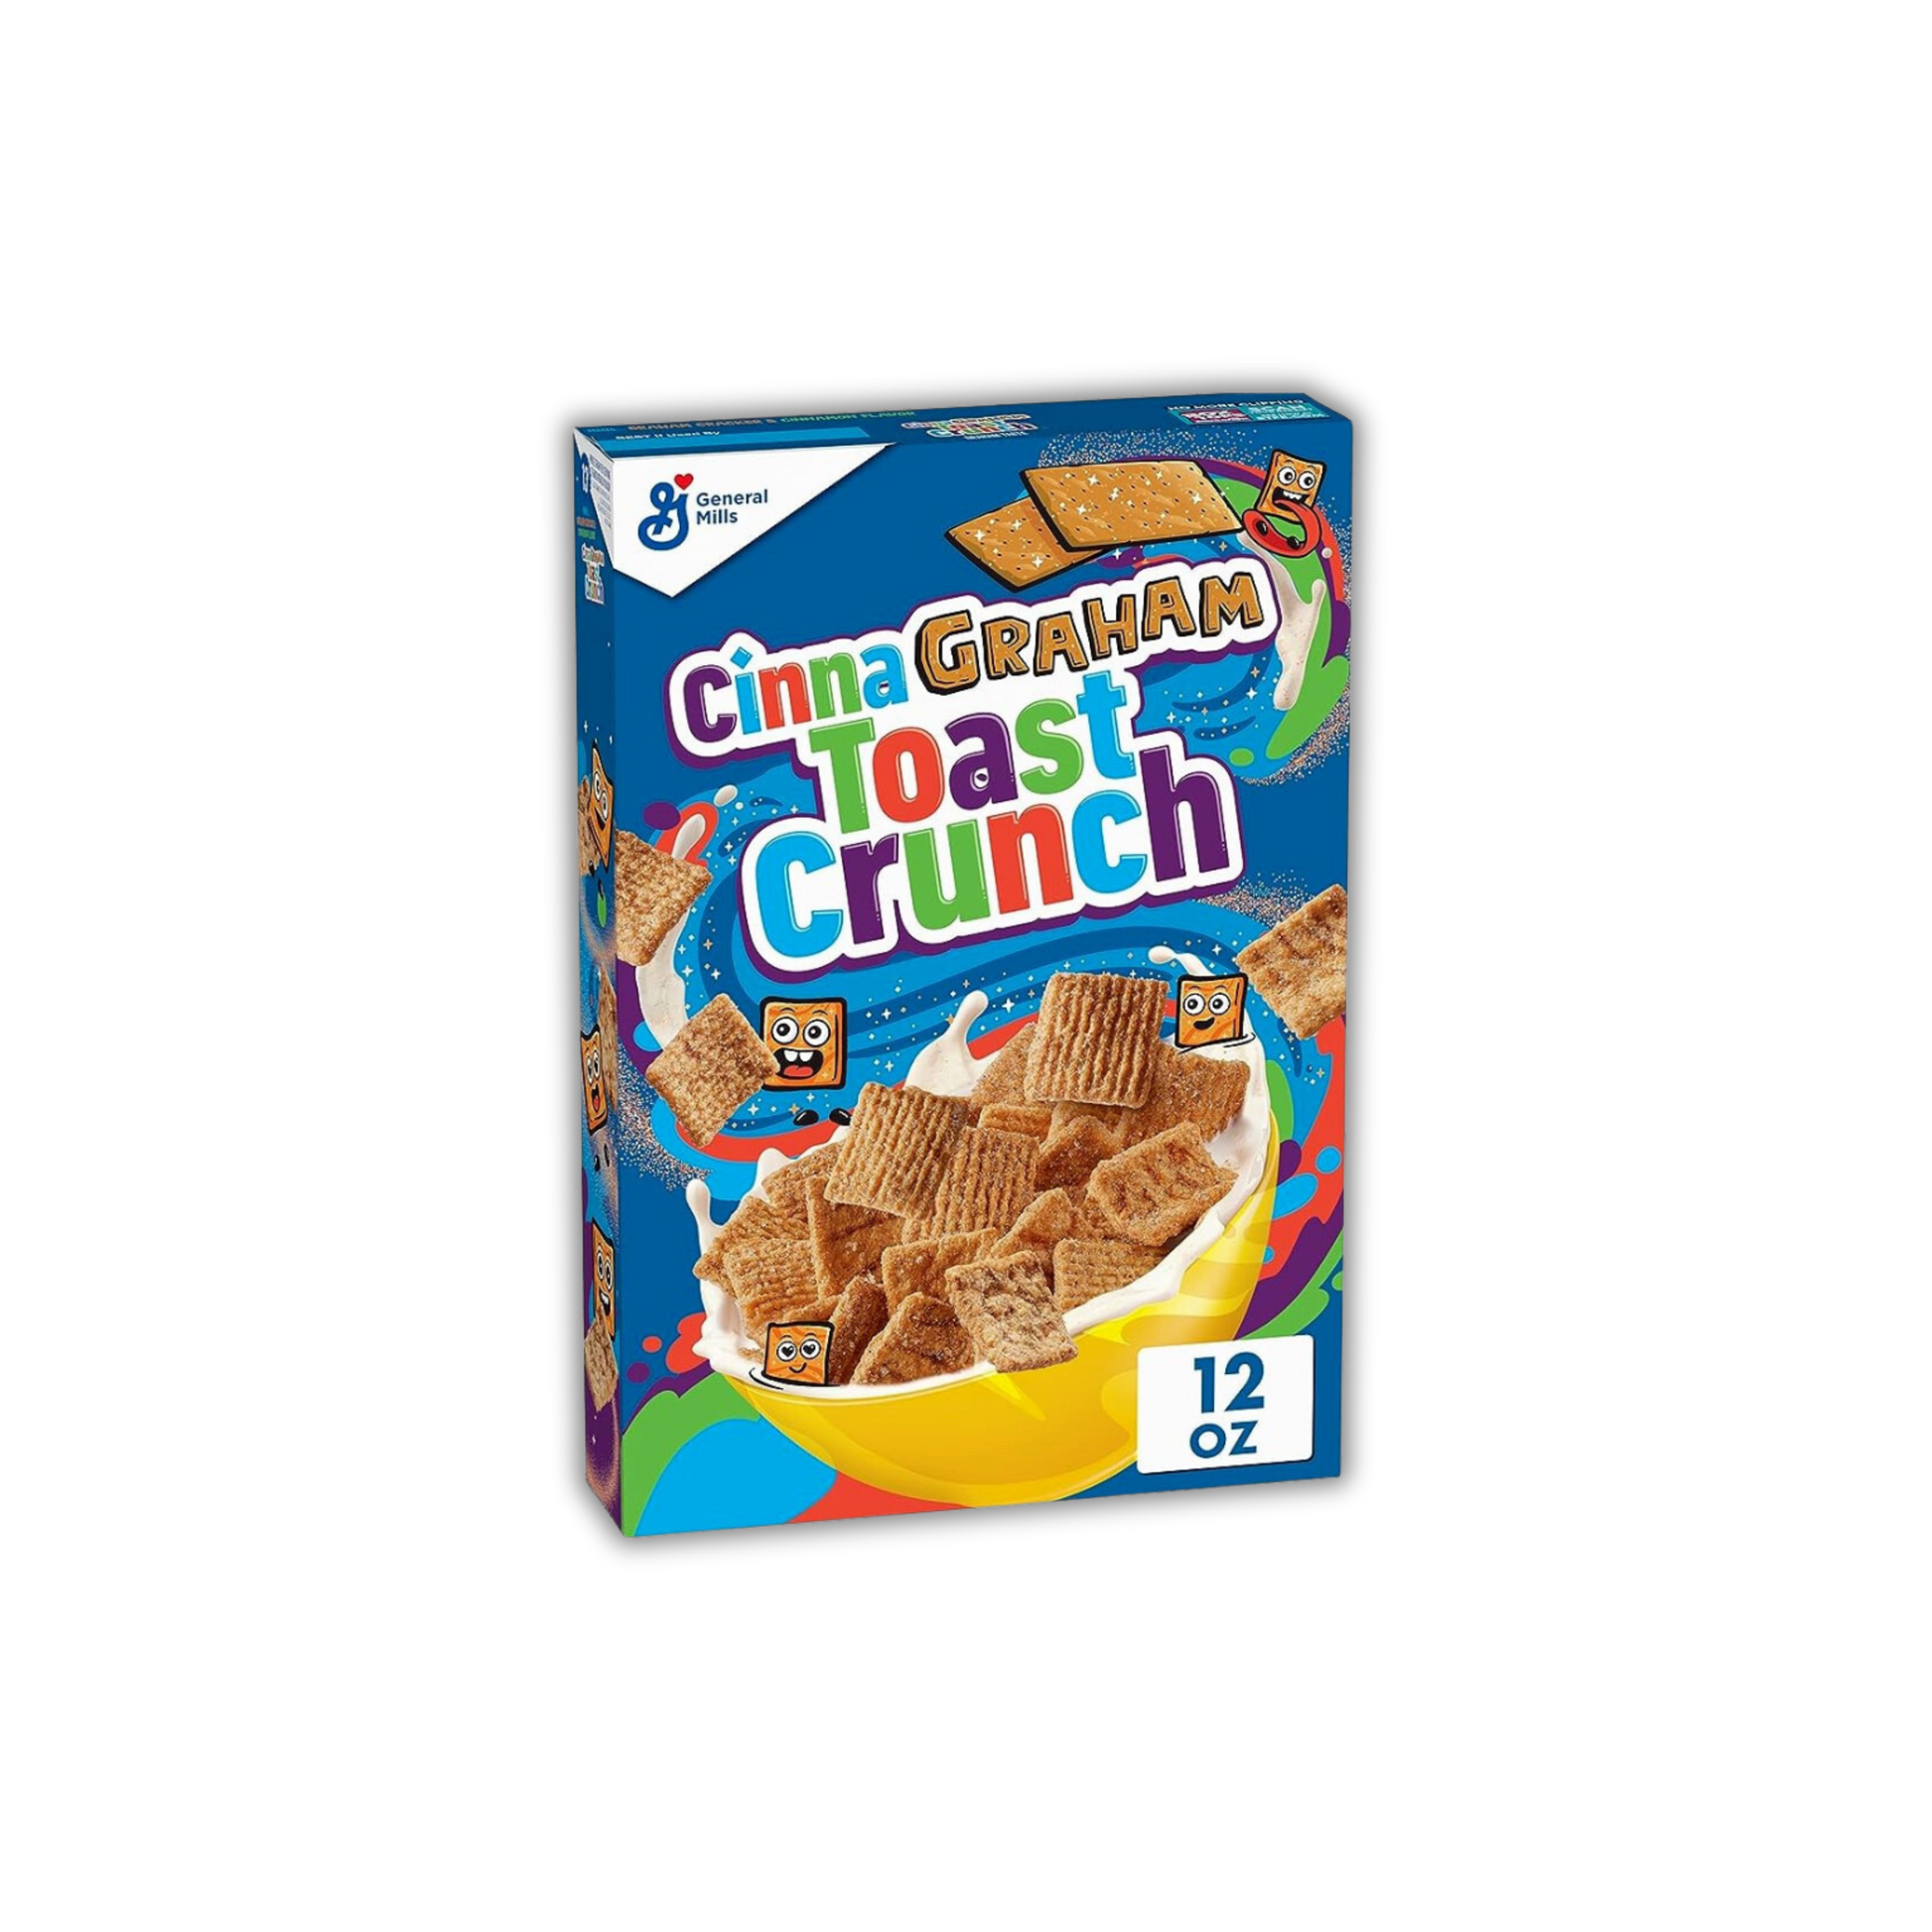 CinnaGraham Toast Crunch American Cereal 340 g Blue box